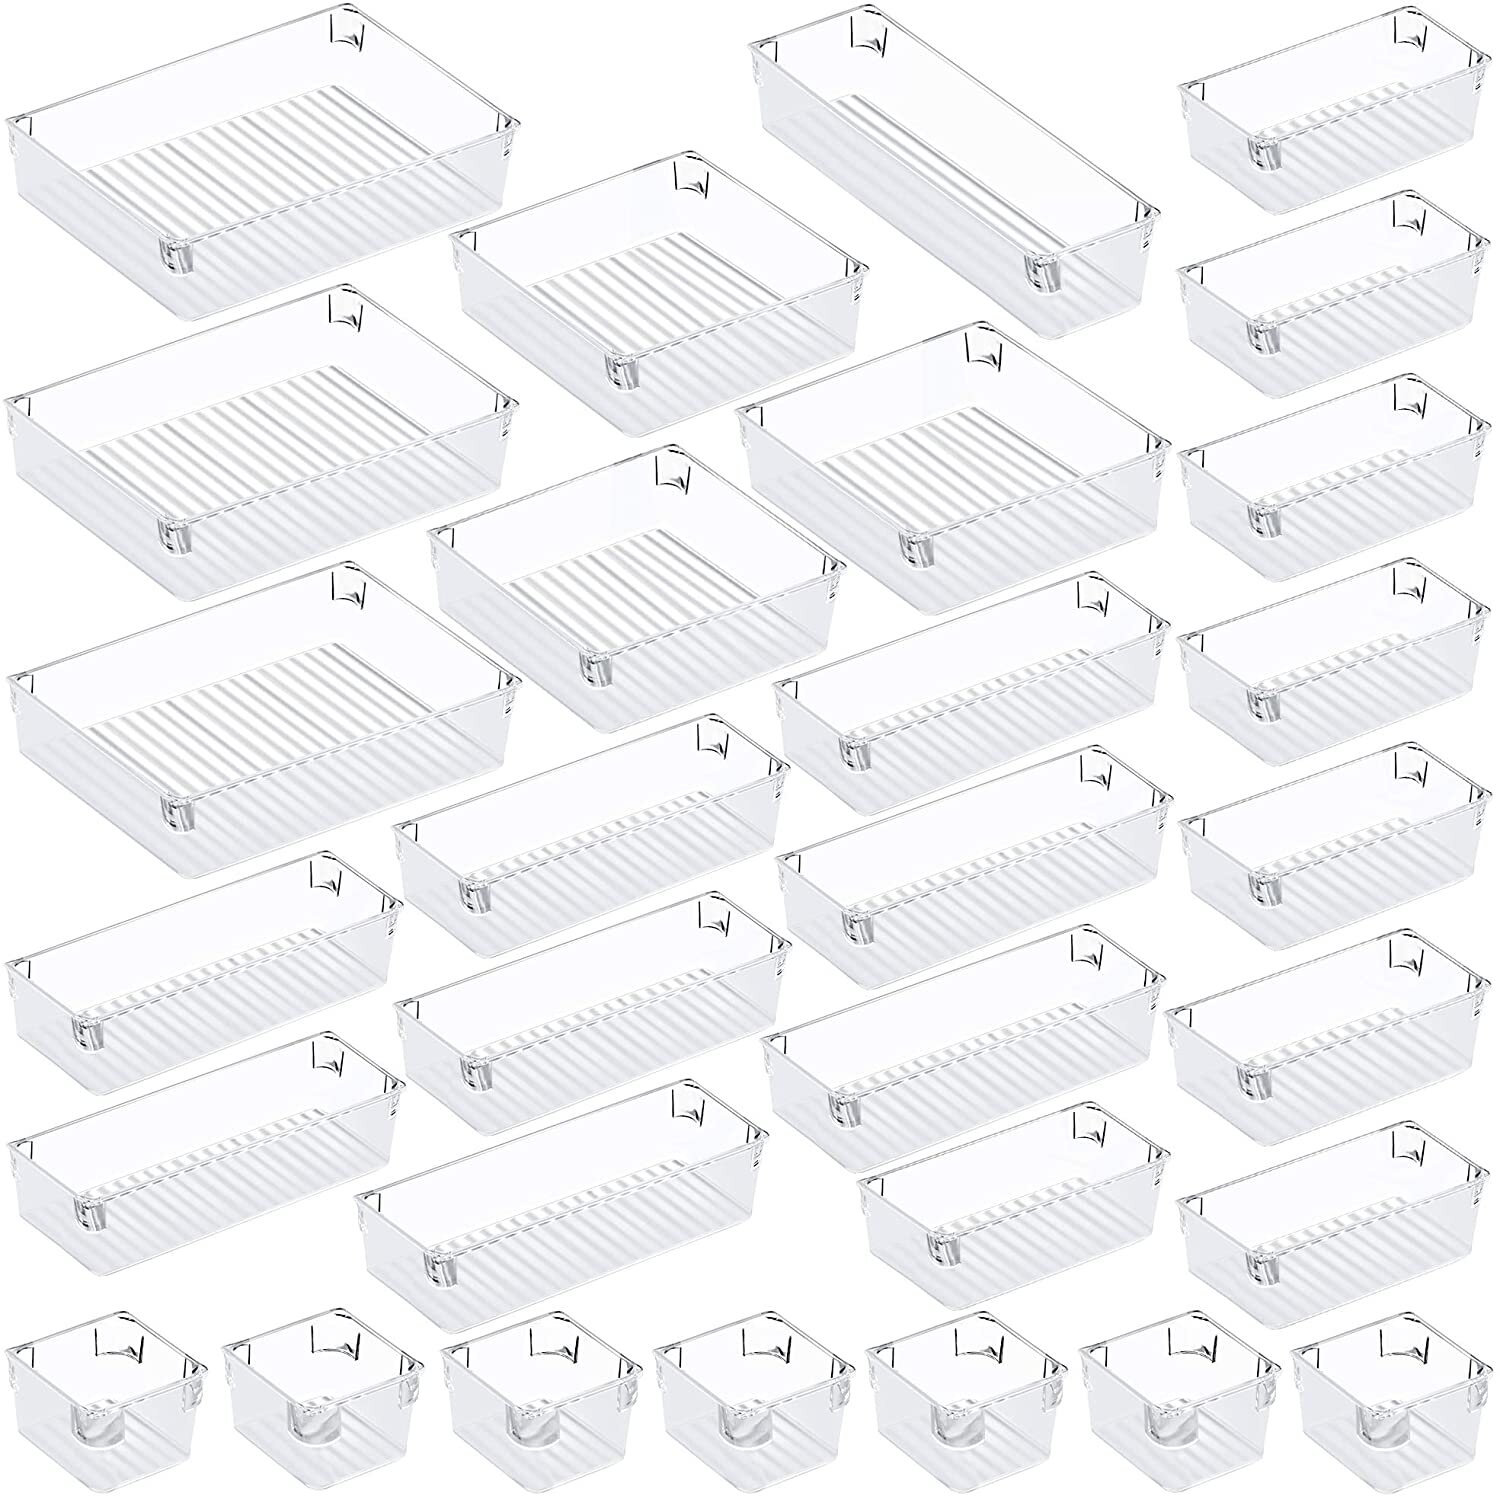 https://images.squarespace-cdn.com/content/v1/5d028b8cbcf64e000159162b/1621627167890-LVKGDKVKWDDWLQ3E8ZAJ/Puroma+31-pcs+Desk+Drawer+Organizer+Trays%2C+5-Size+Large+Capacity+Plastic+Drawer+Storage+Bins+Kitchen+Drawer+Organizers+Bathroom+Drawer+Dividers+for+Makeup%2C+Kitchen+Utensils%2C+and+Jewelries+-+Clear